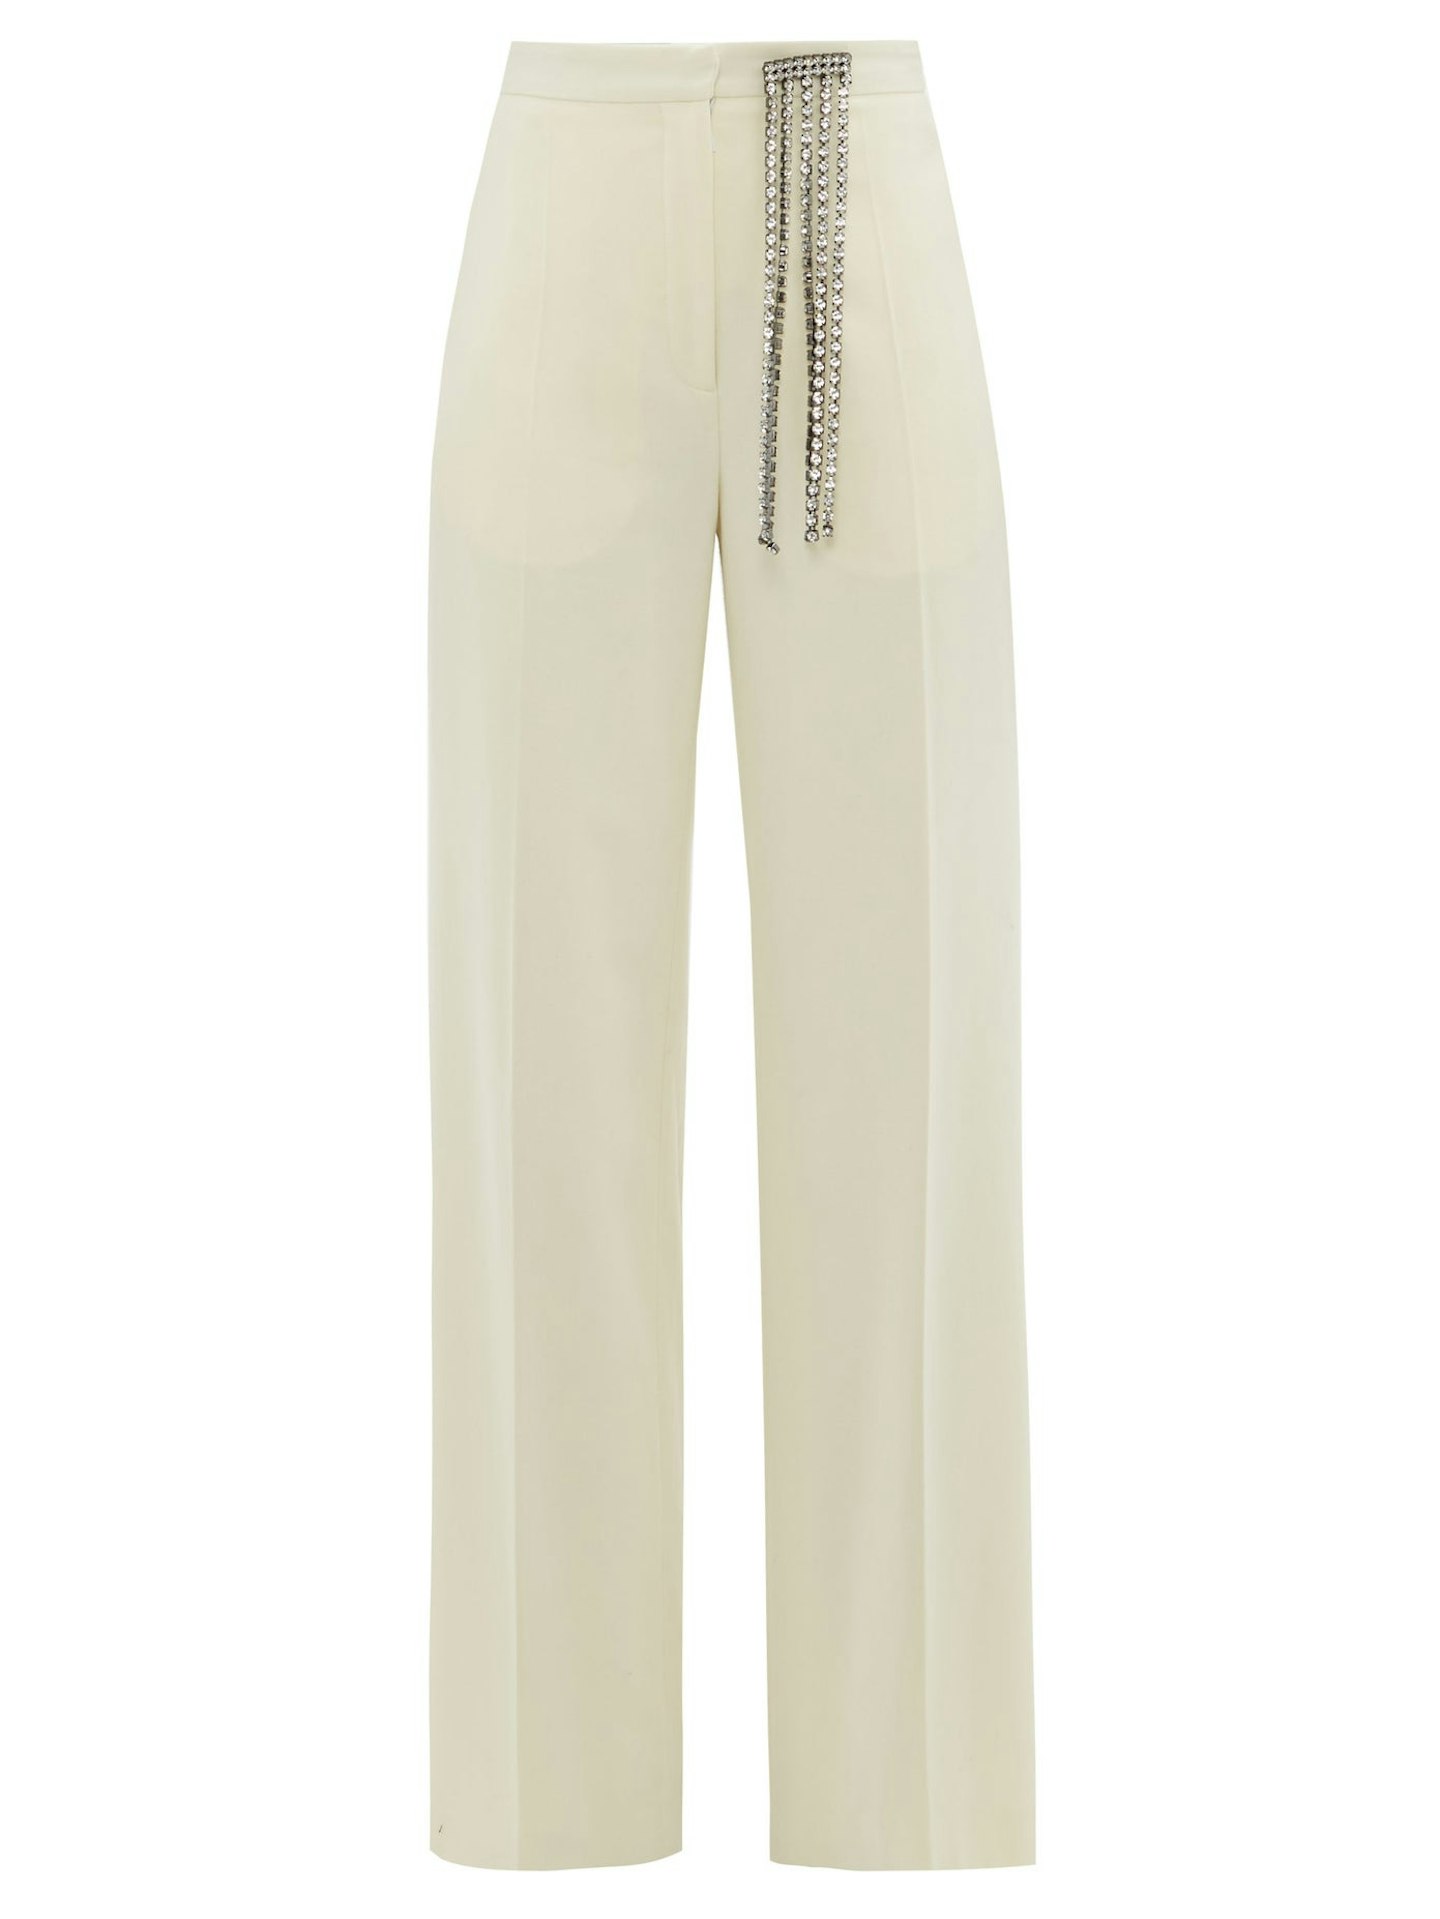 Christopher Kane, Crystal-Embellished Trousers, £795